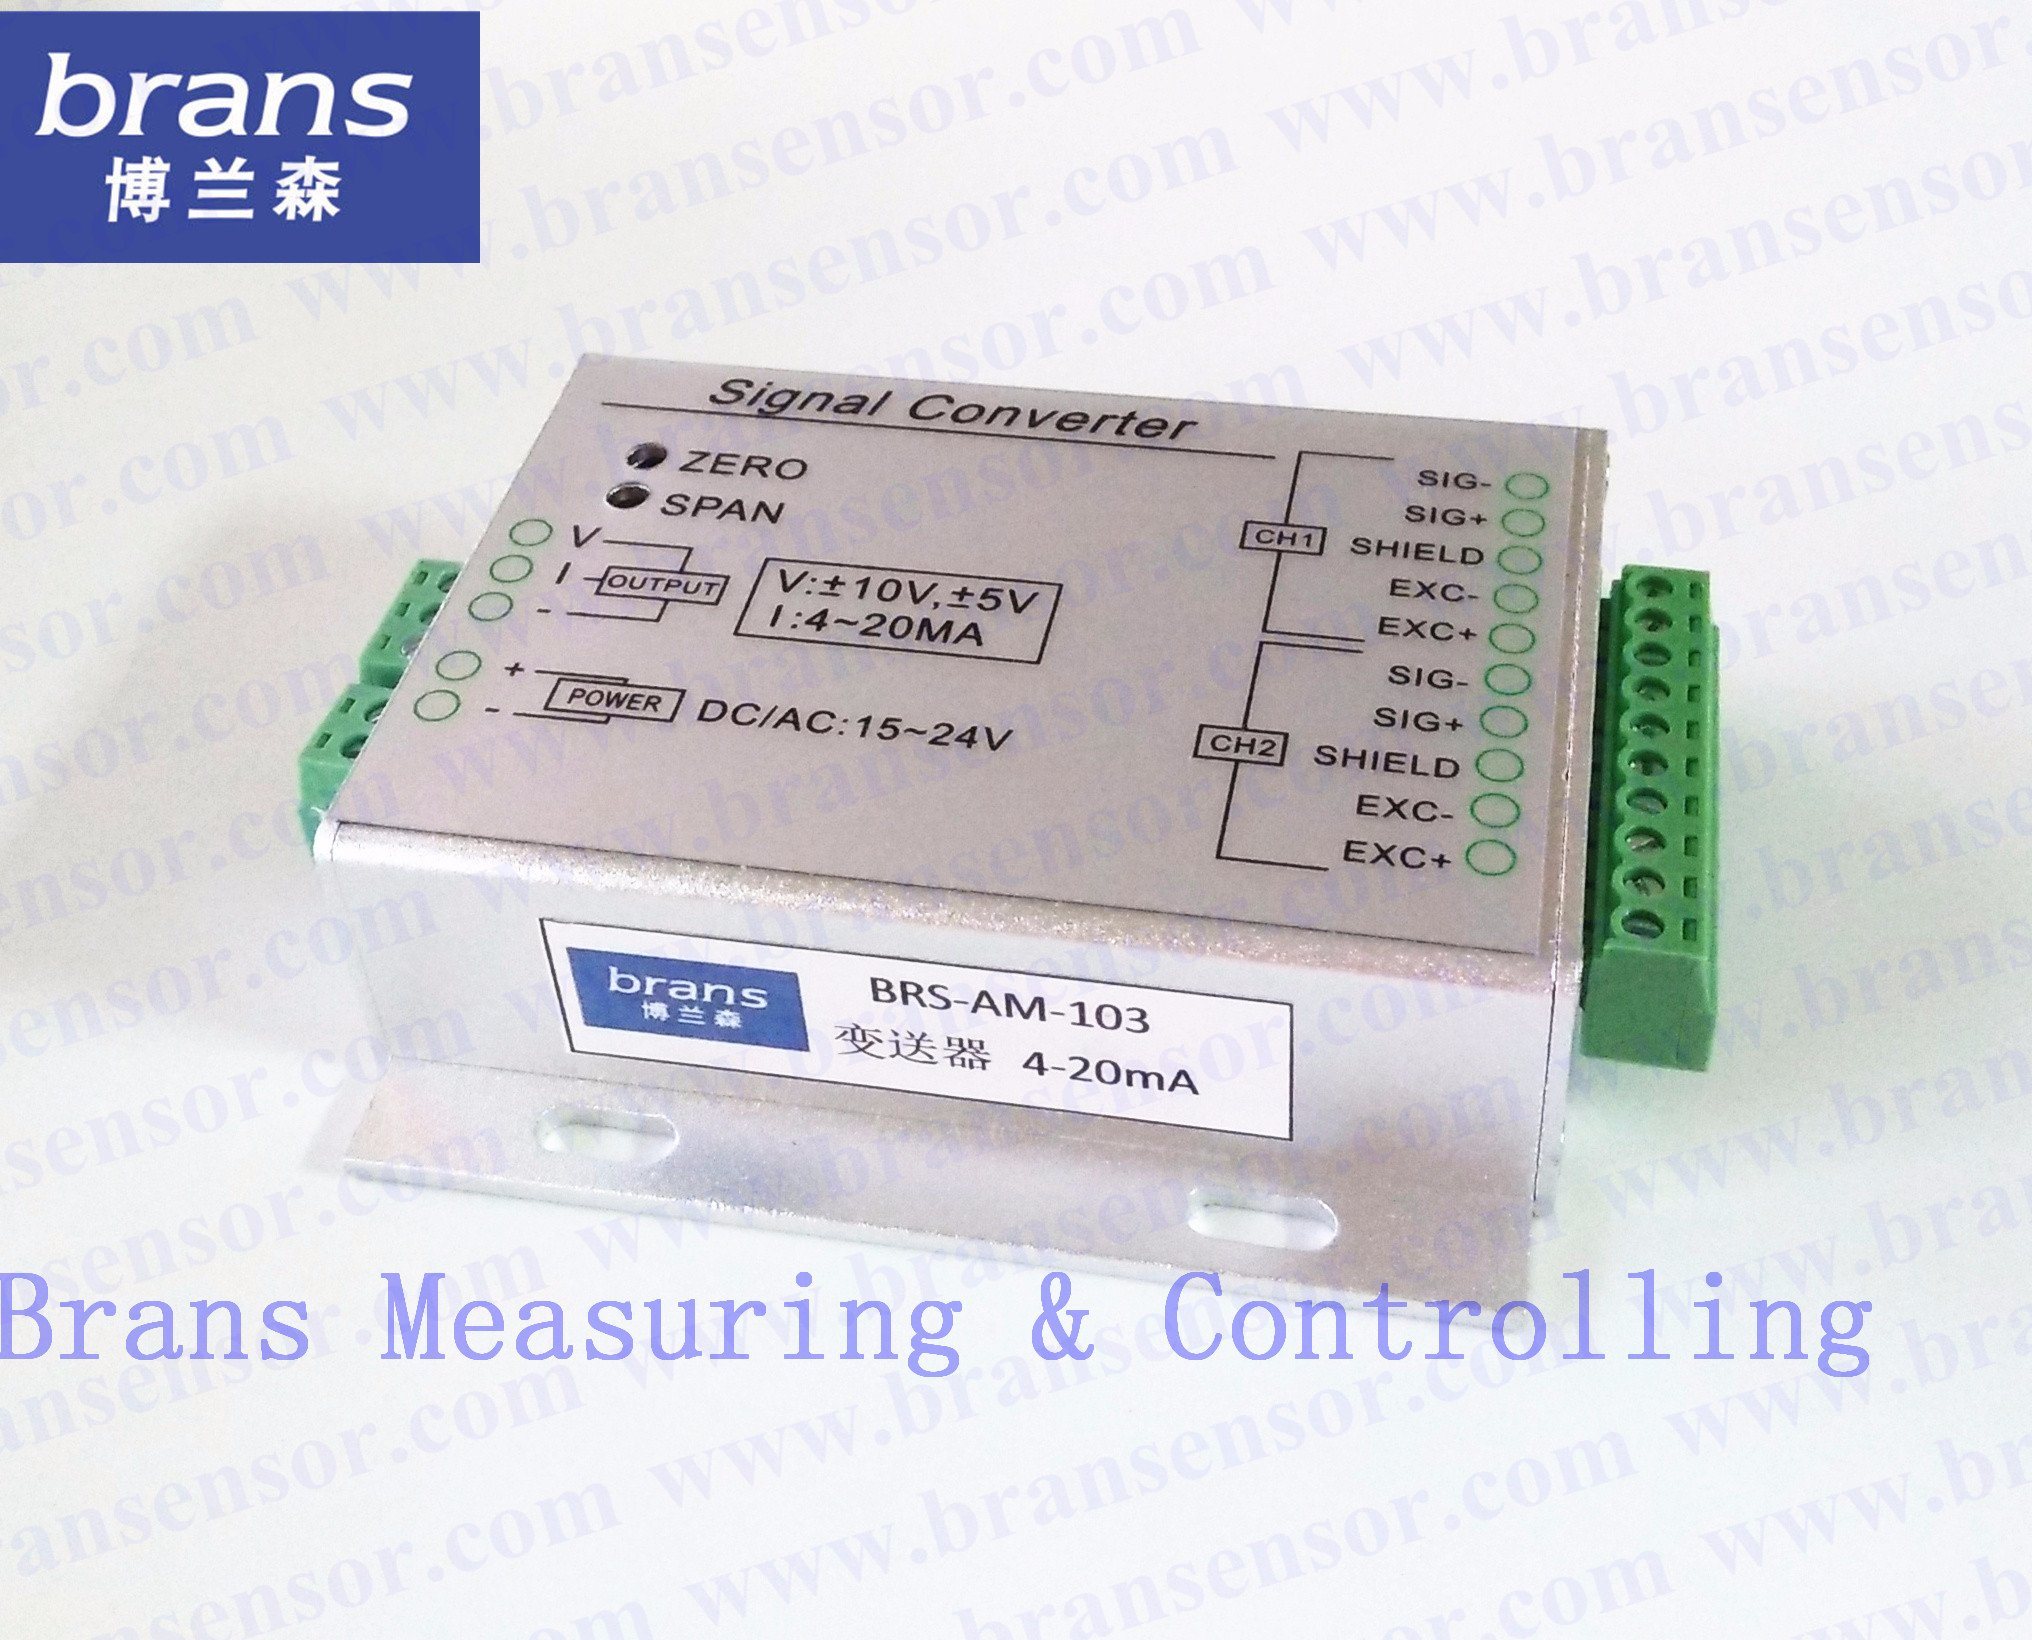 Load Cell Analog Amplifier 0-10V Output (BRS-AM-103)